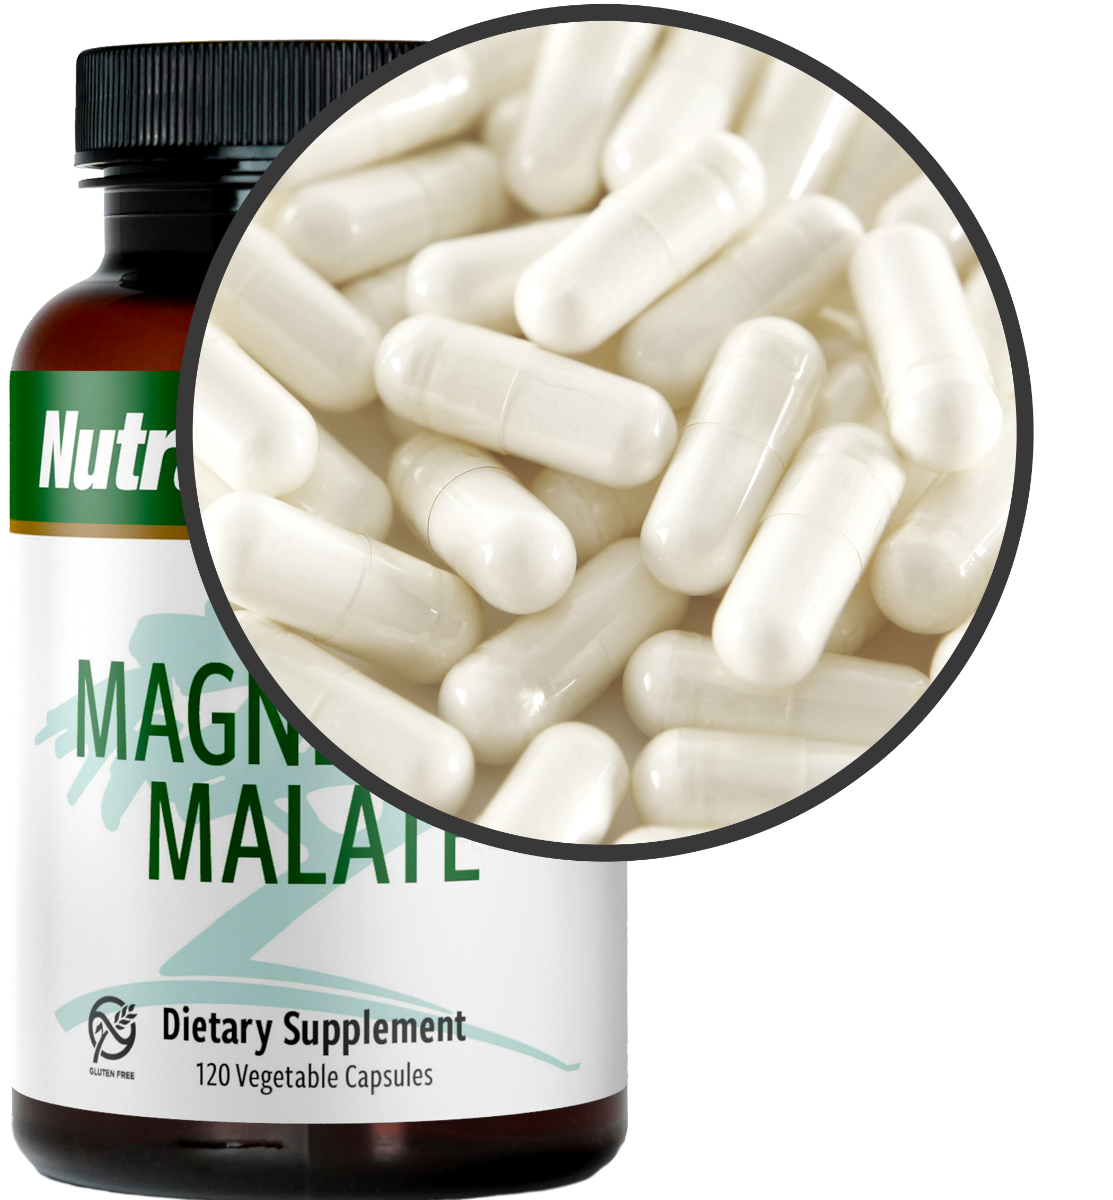 Magnesium Malate Nutramedix capsules 120 pieces 